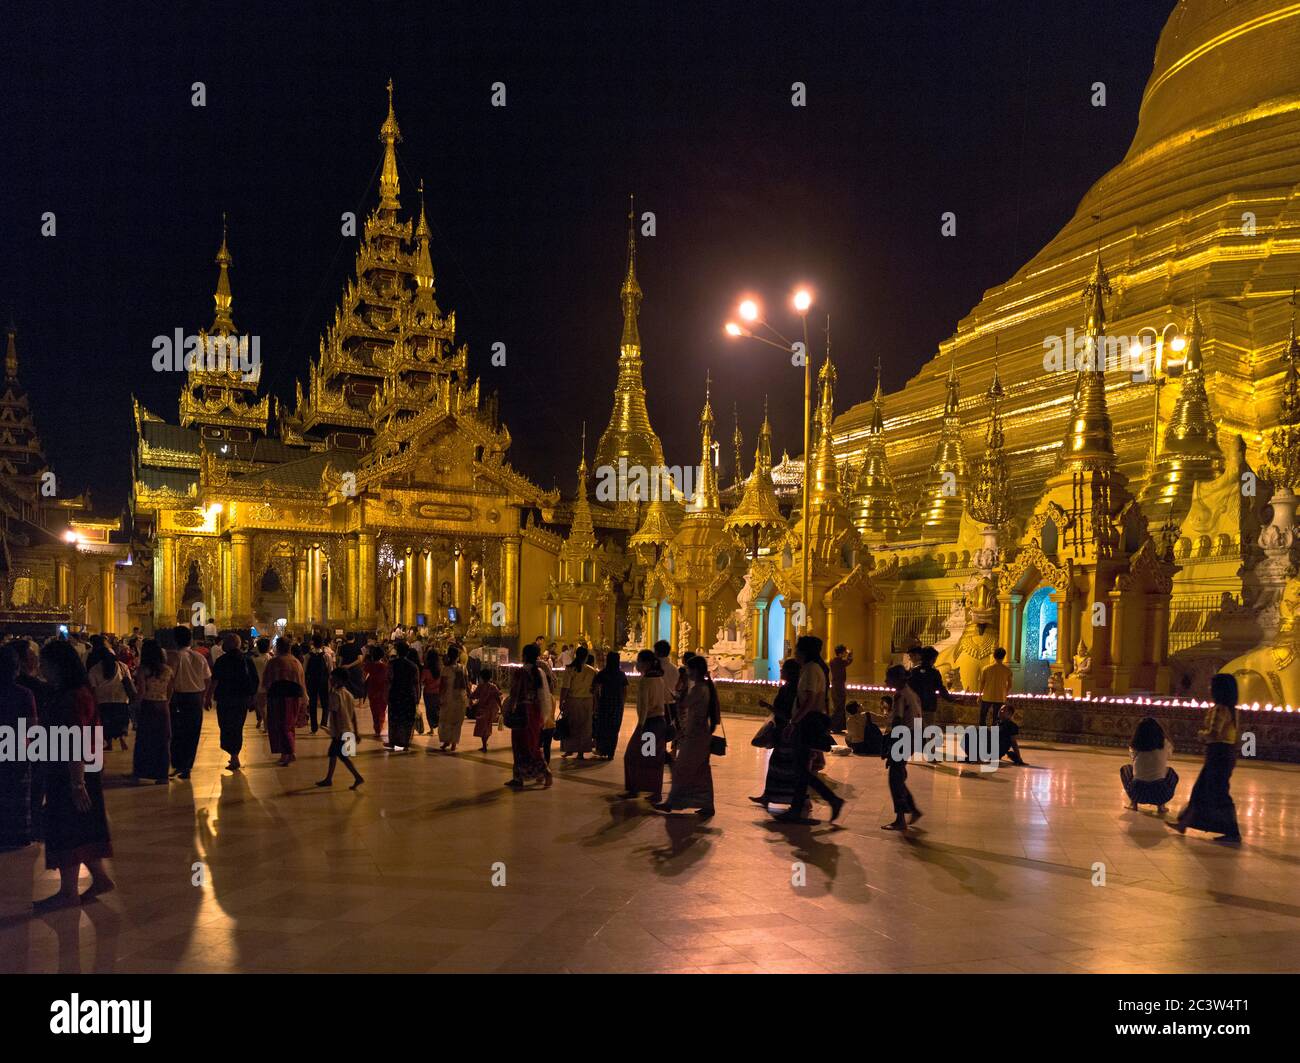 dh Shwedagon Pagoda tempio YANGON MYANMAR folle templi buddisti notte Grande Dagon Zedi Daw oro stupida oro foglia popolo birmano Foto Stock